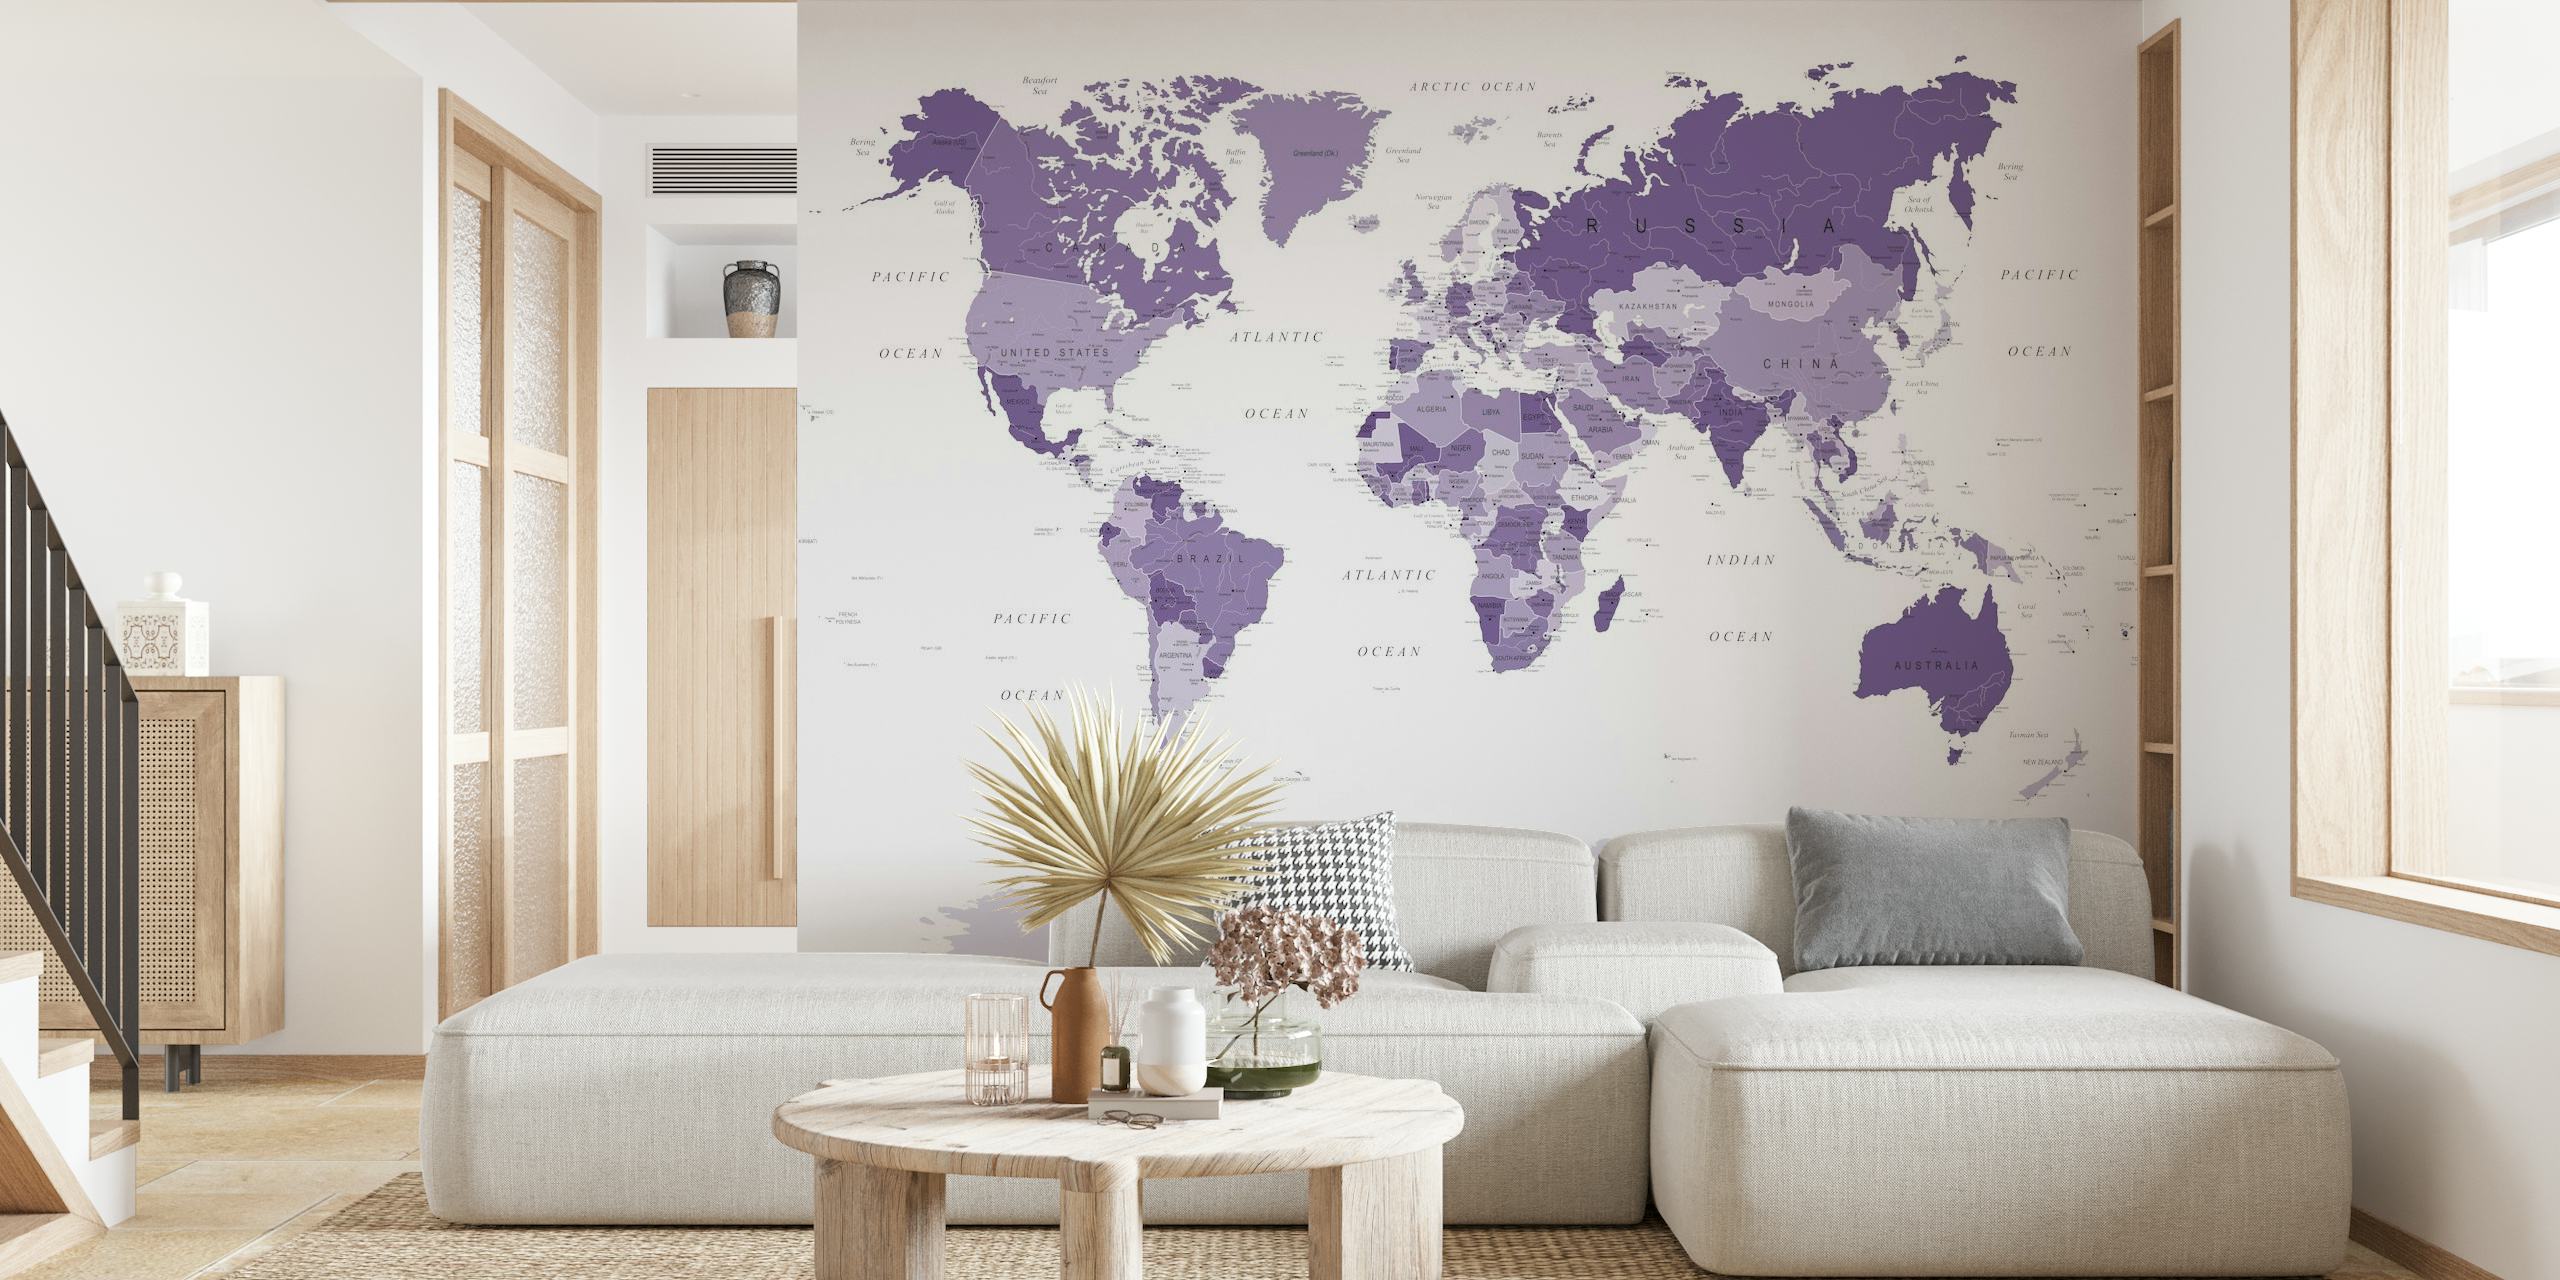 World Map in Purple papel pintado